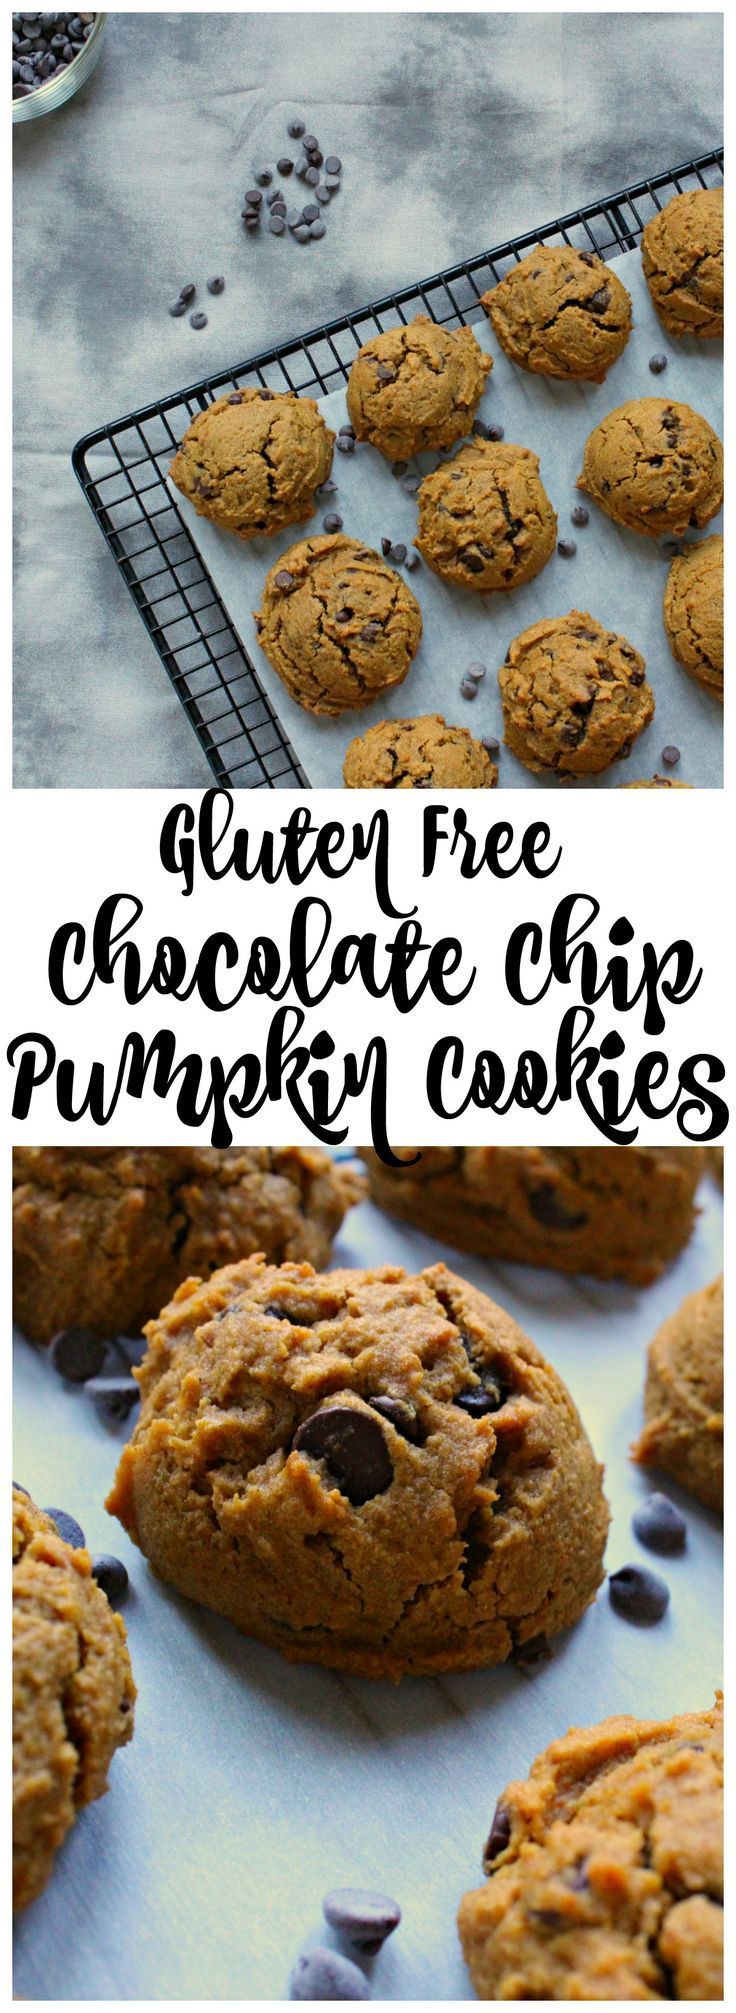 Gluten Free Chocolate Chip Pumpkin Cookies -   13 healthy recipes Gluten Free chocolate chip cookies ideas